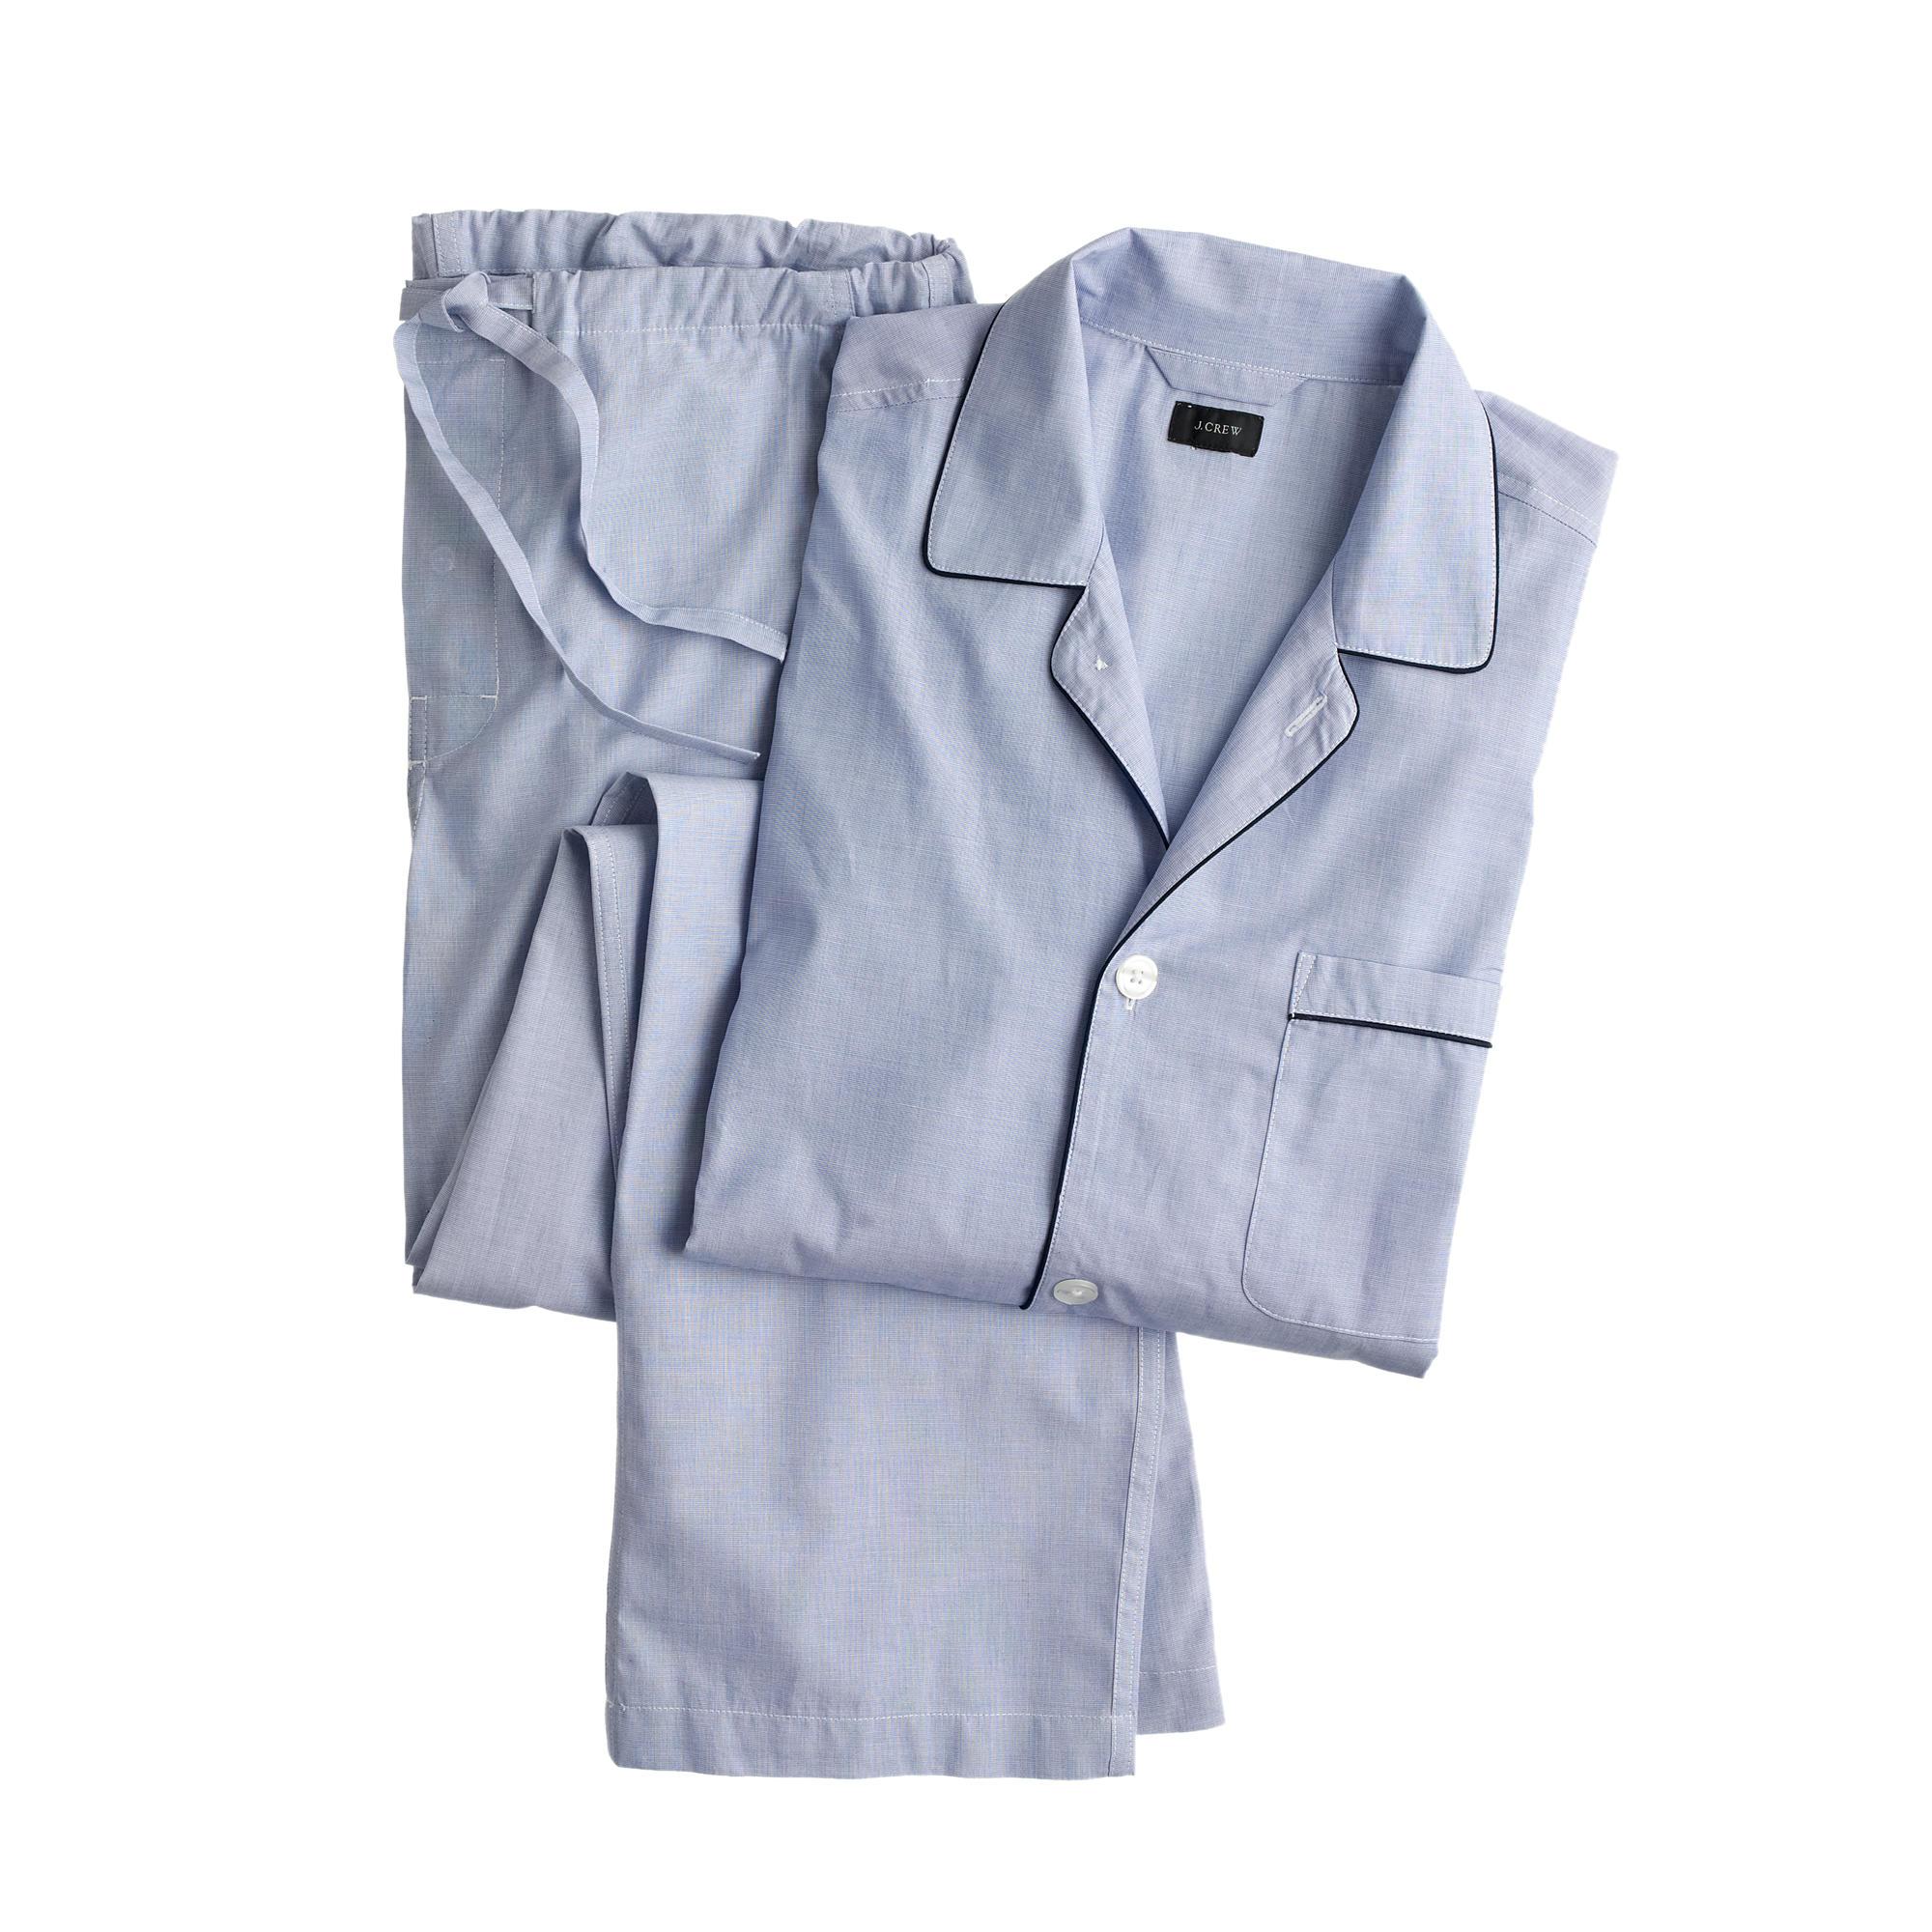 J.Crew Cotton Poplin Pajama Set in Blue for Men - Lyst